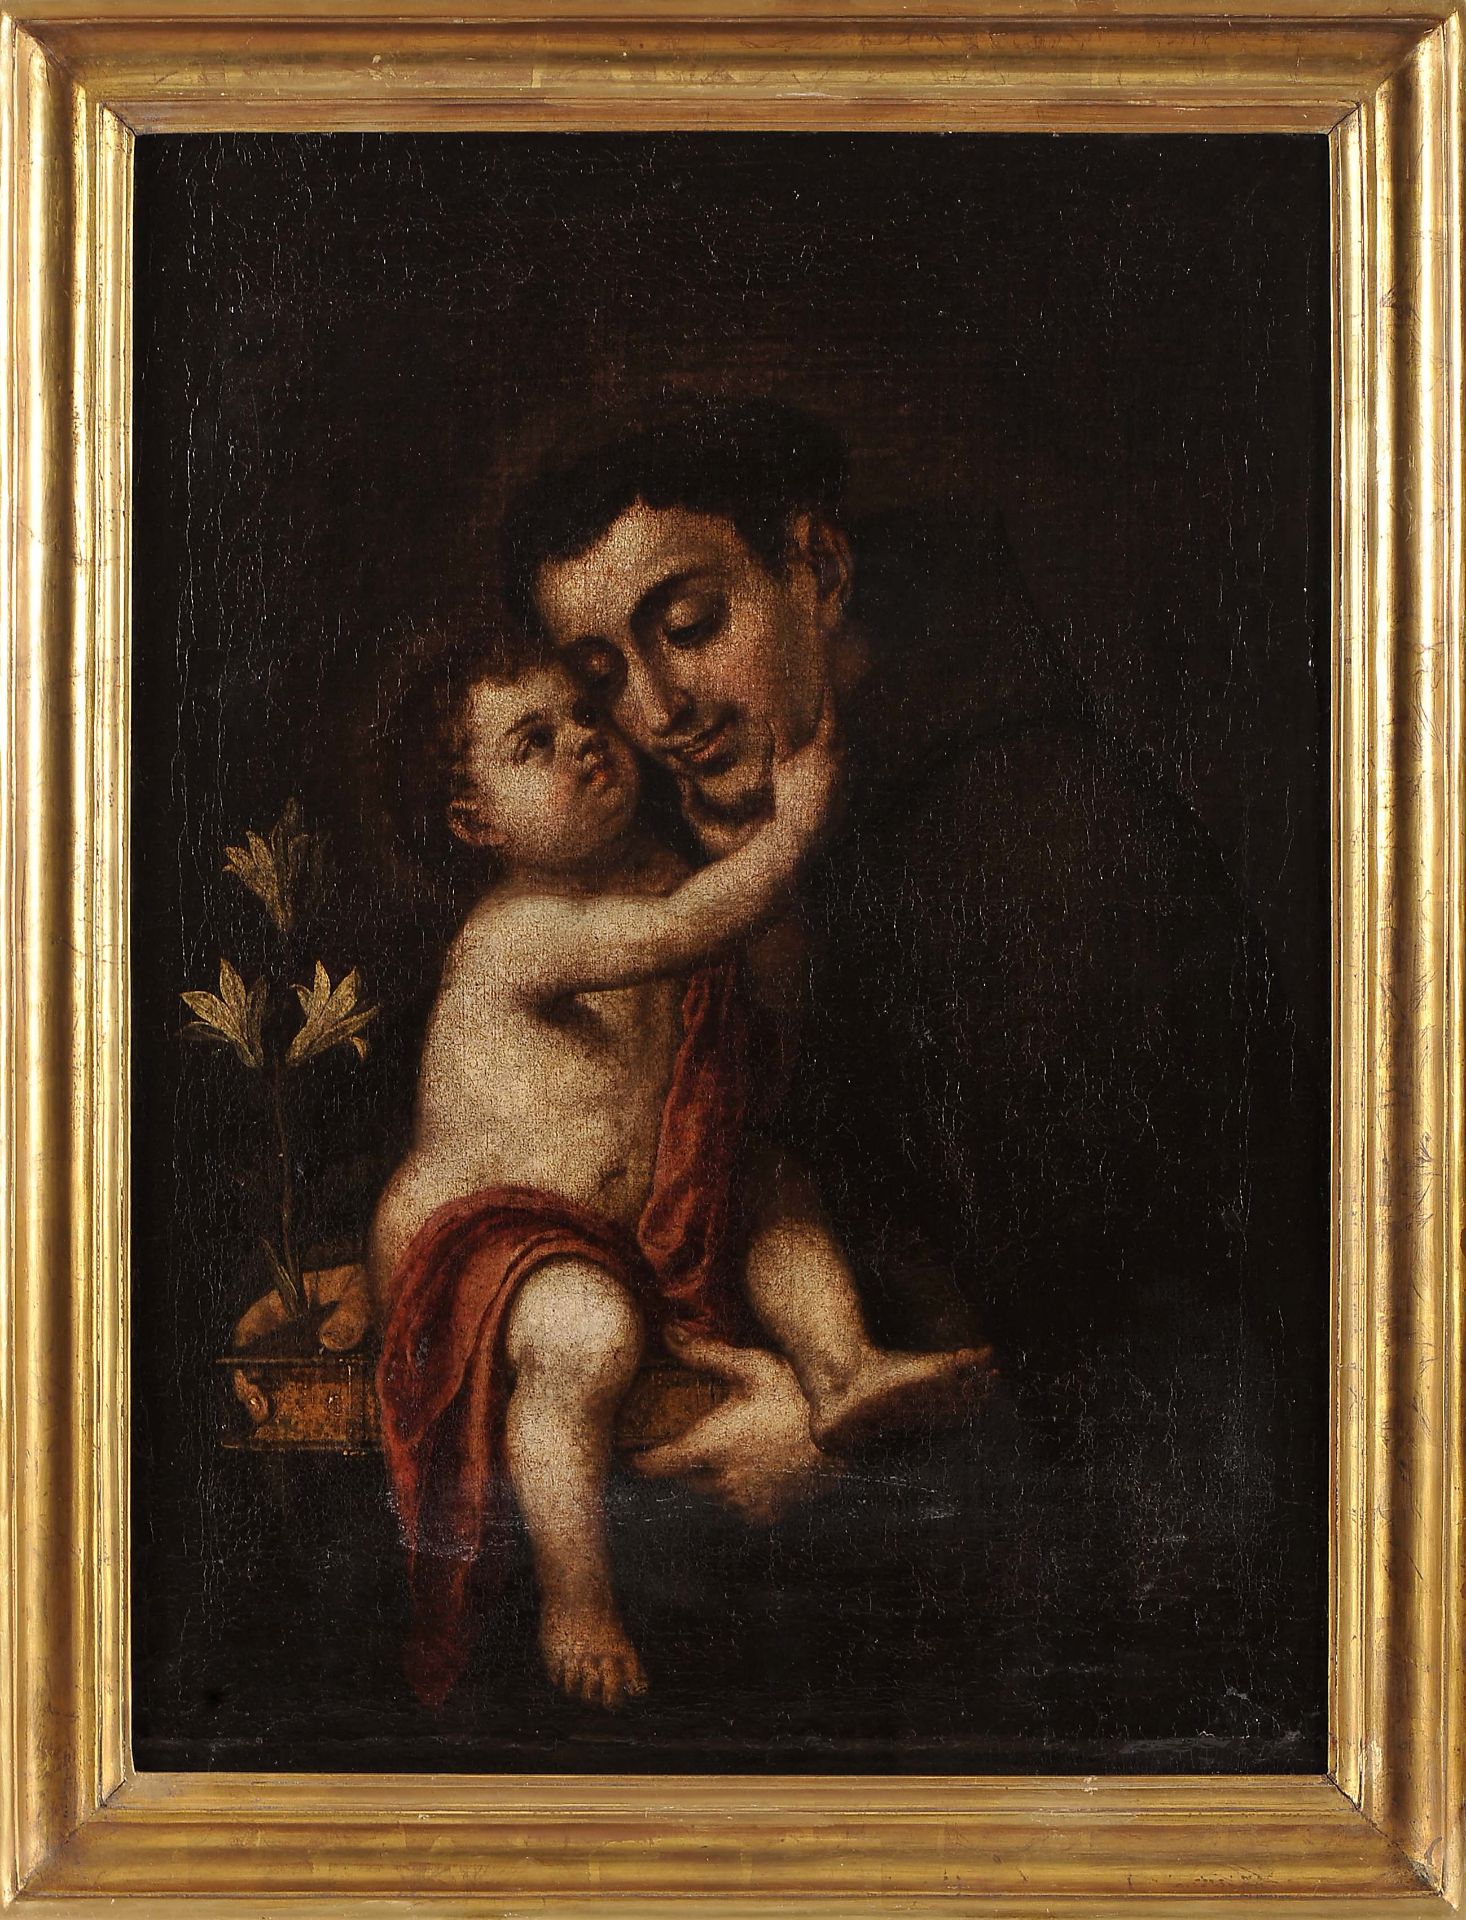 Saint Anthony with The Child Jesus